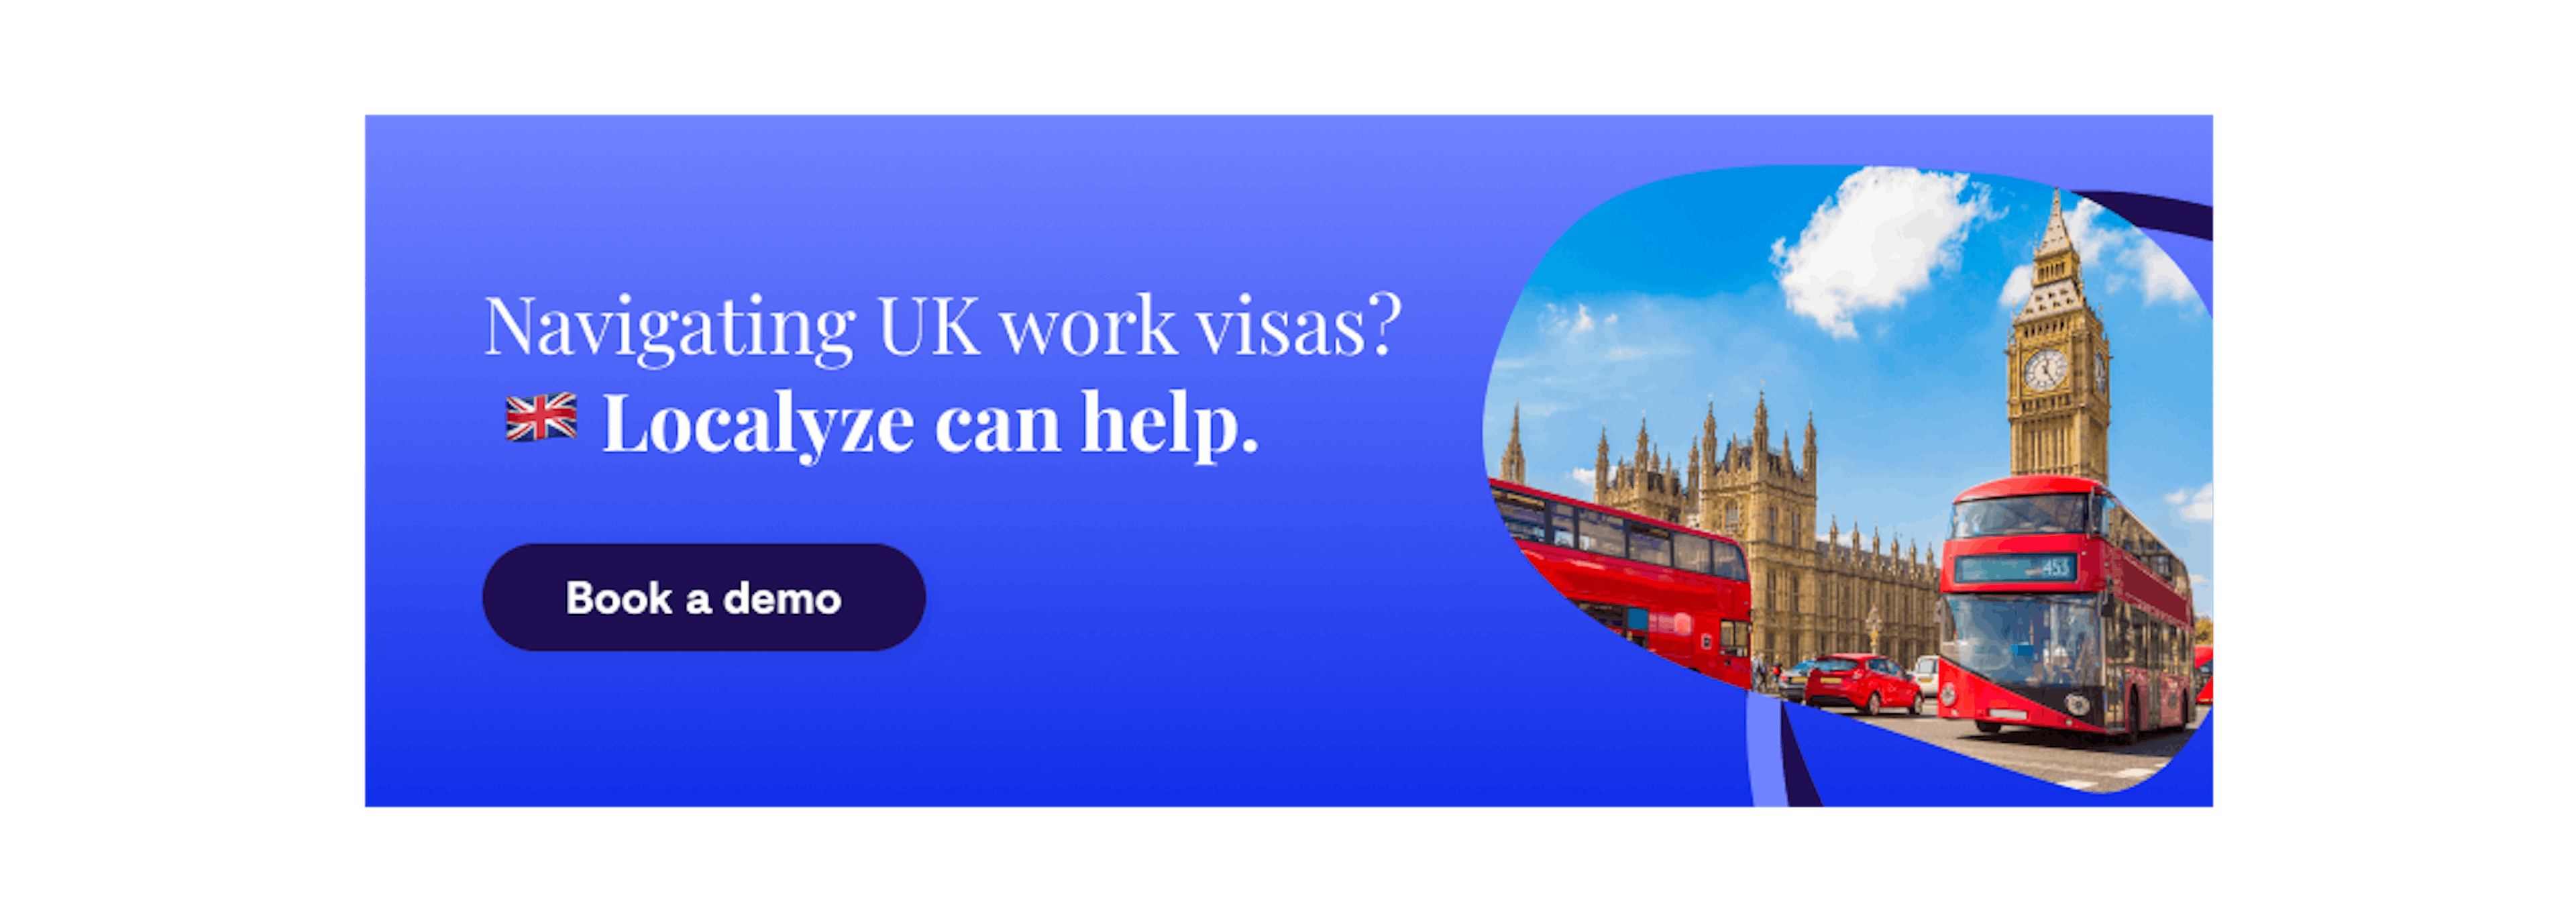 UK work visas with Localyze